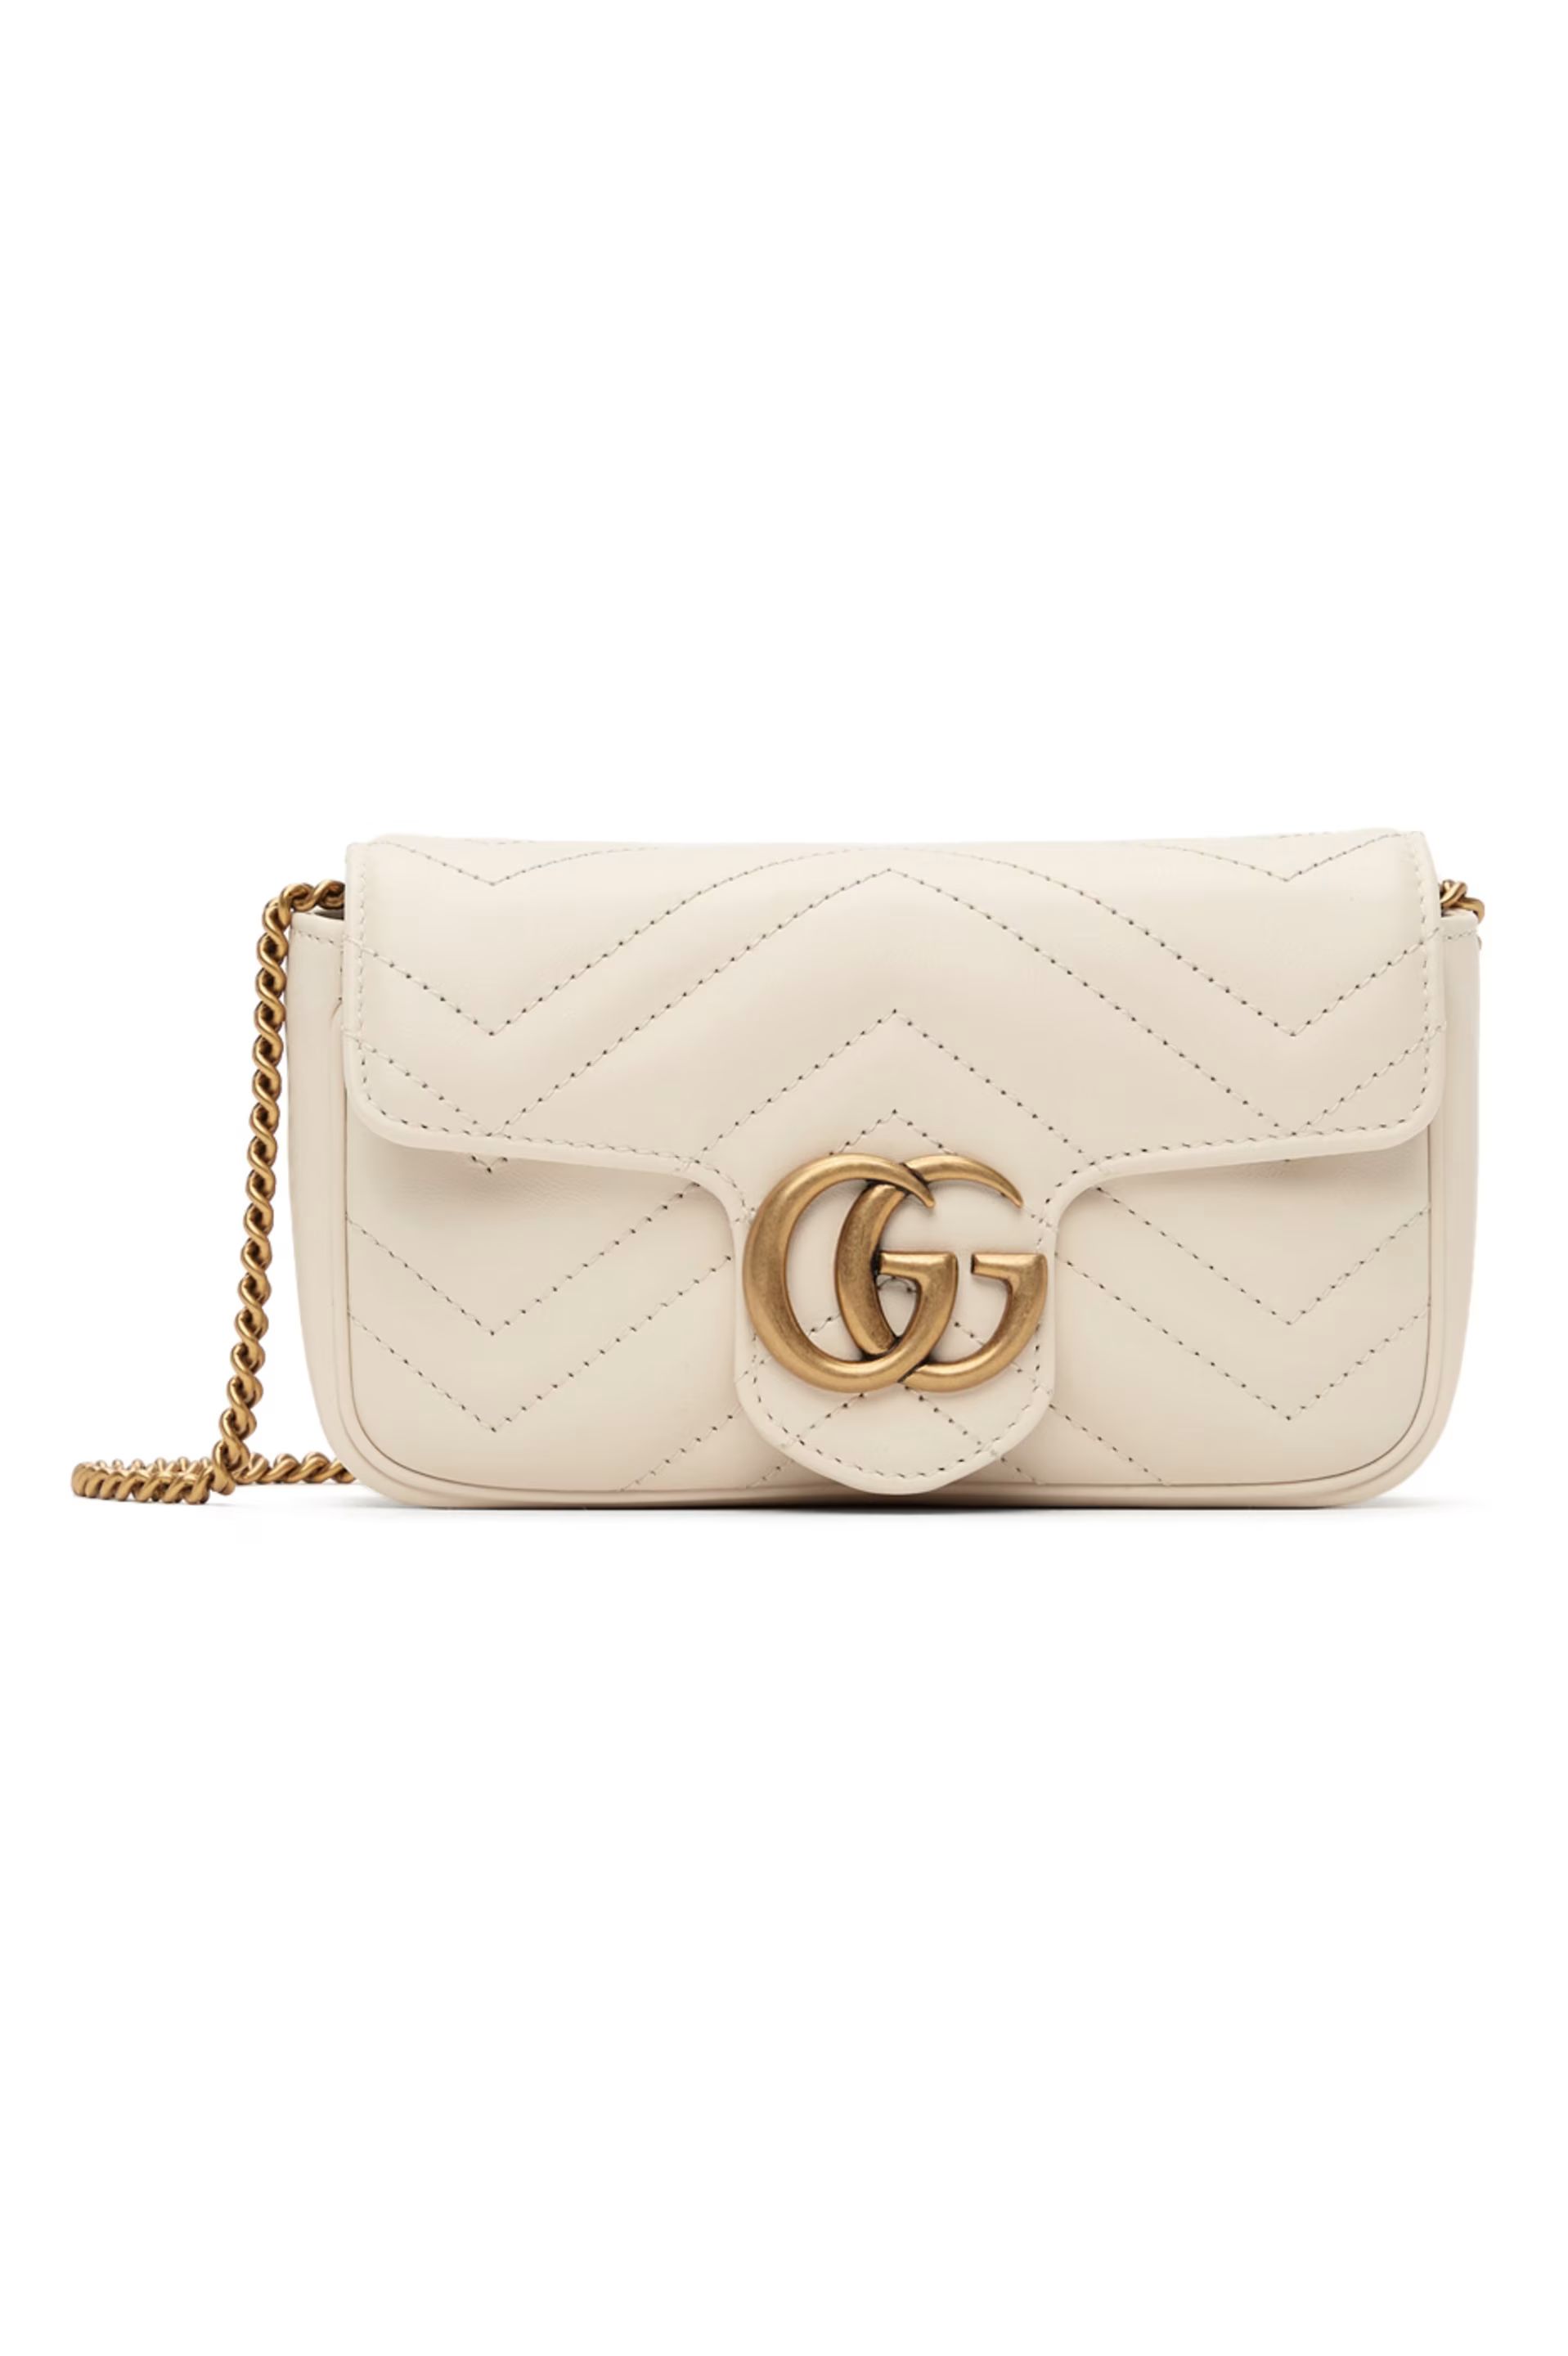 Gucci - White Super Mini GG Marmont Bag | SSENSE